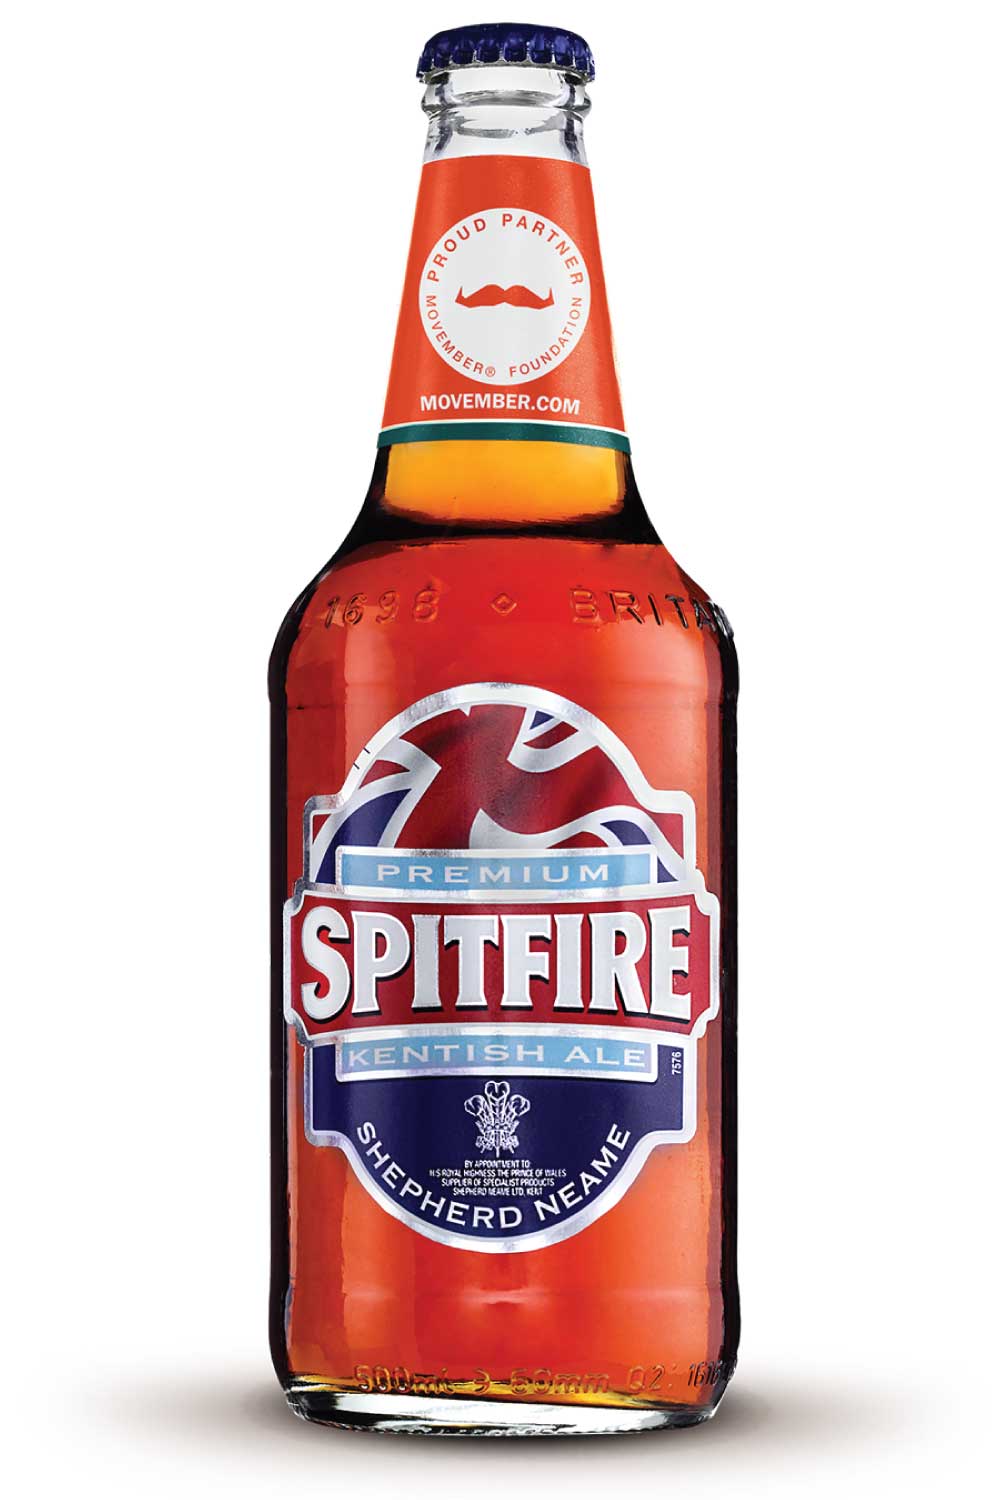 Spitfire Movember 2016 bottle